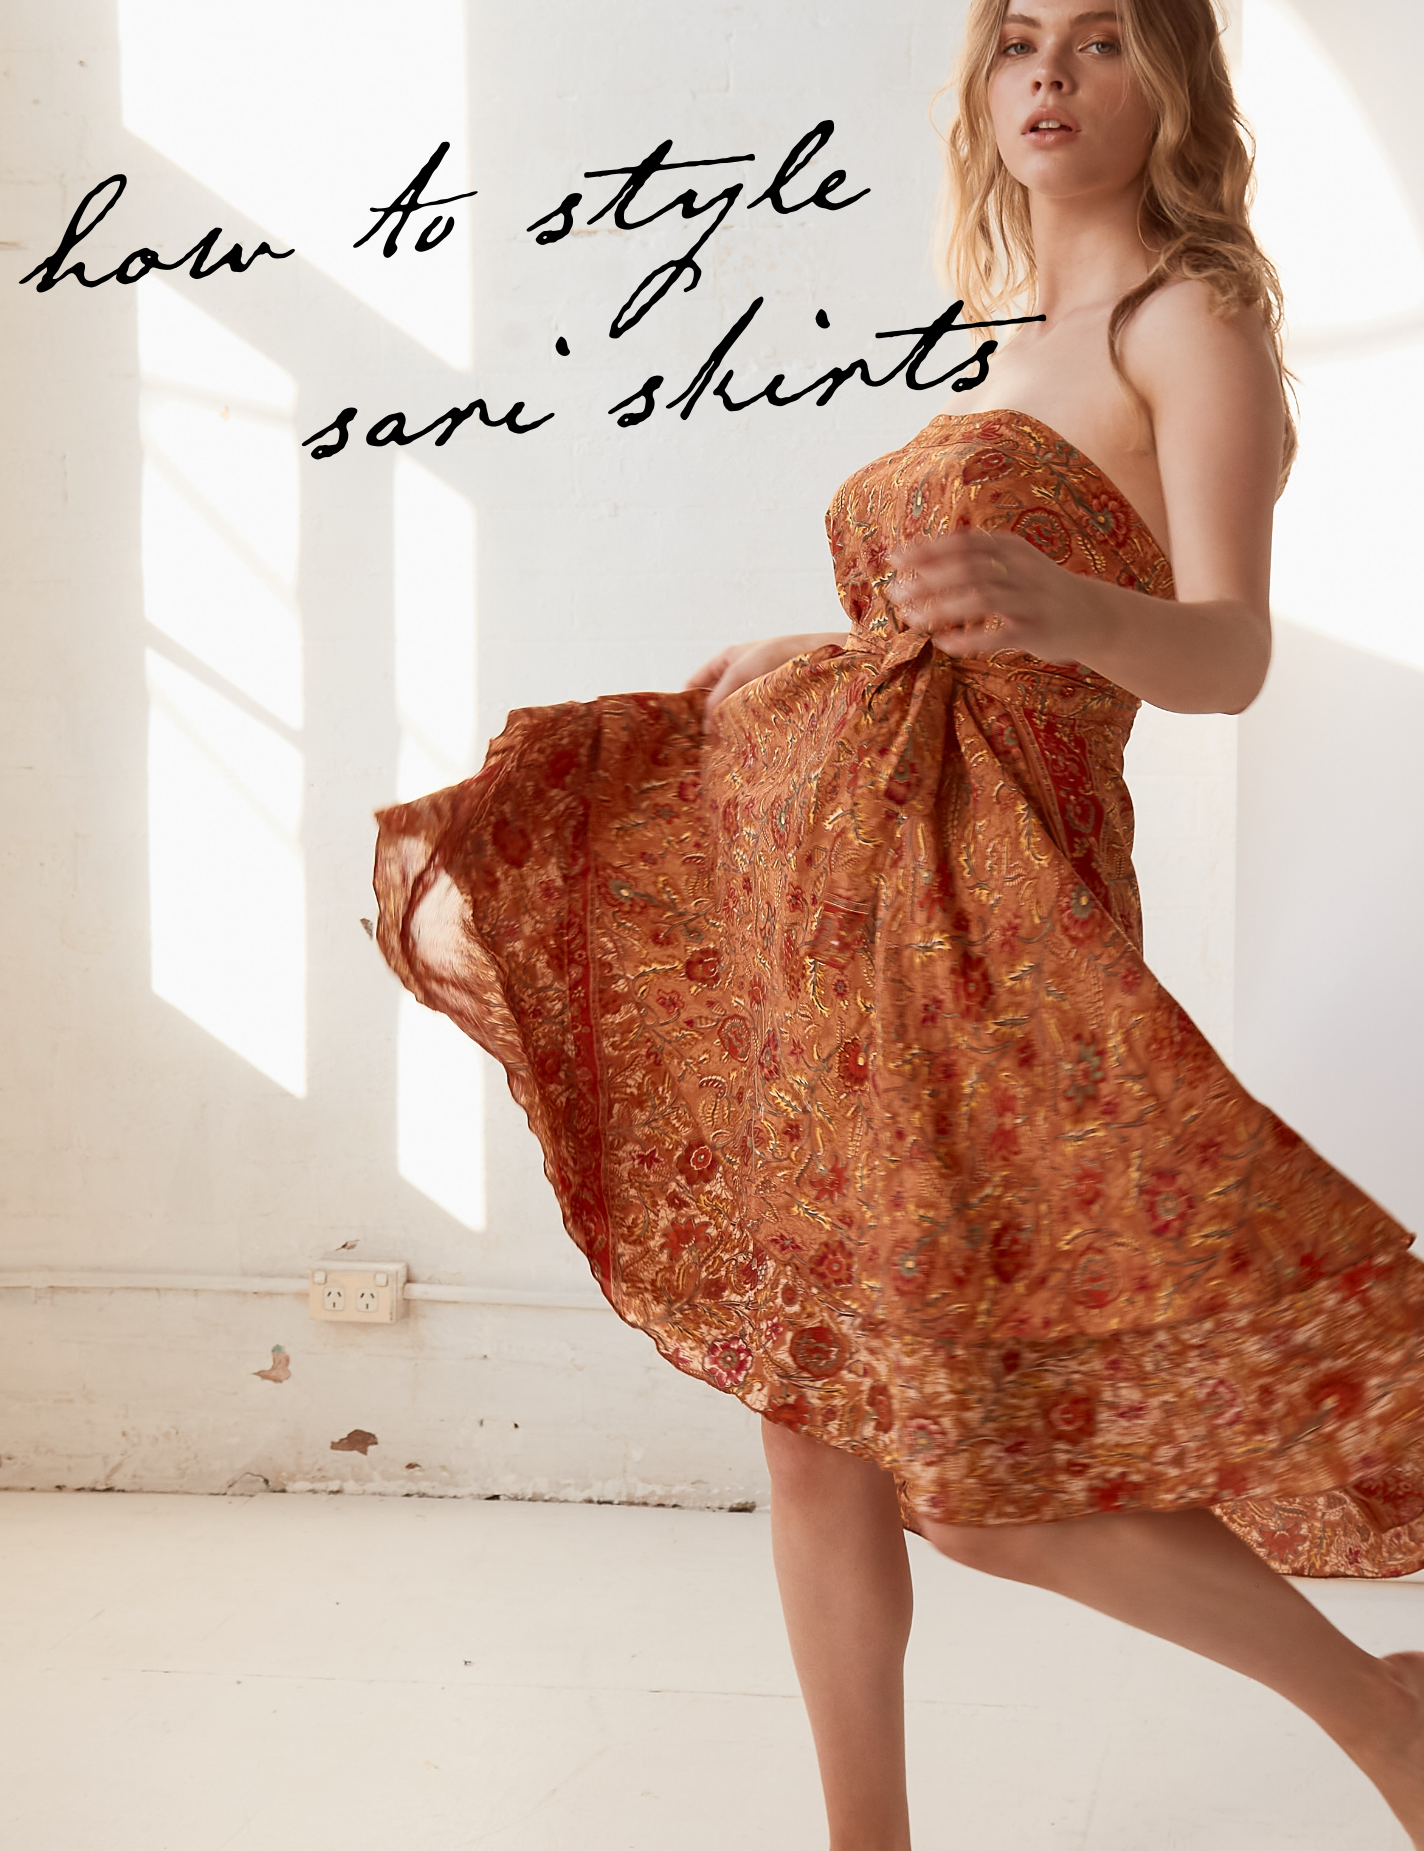 How to Style Sari Skirts